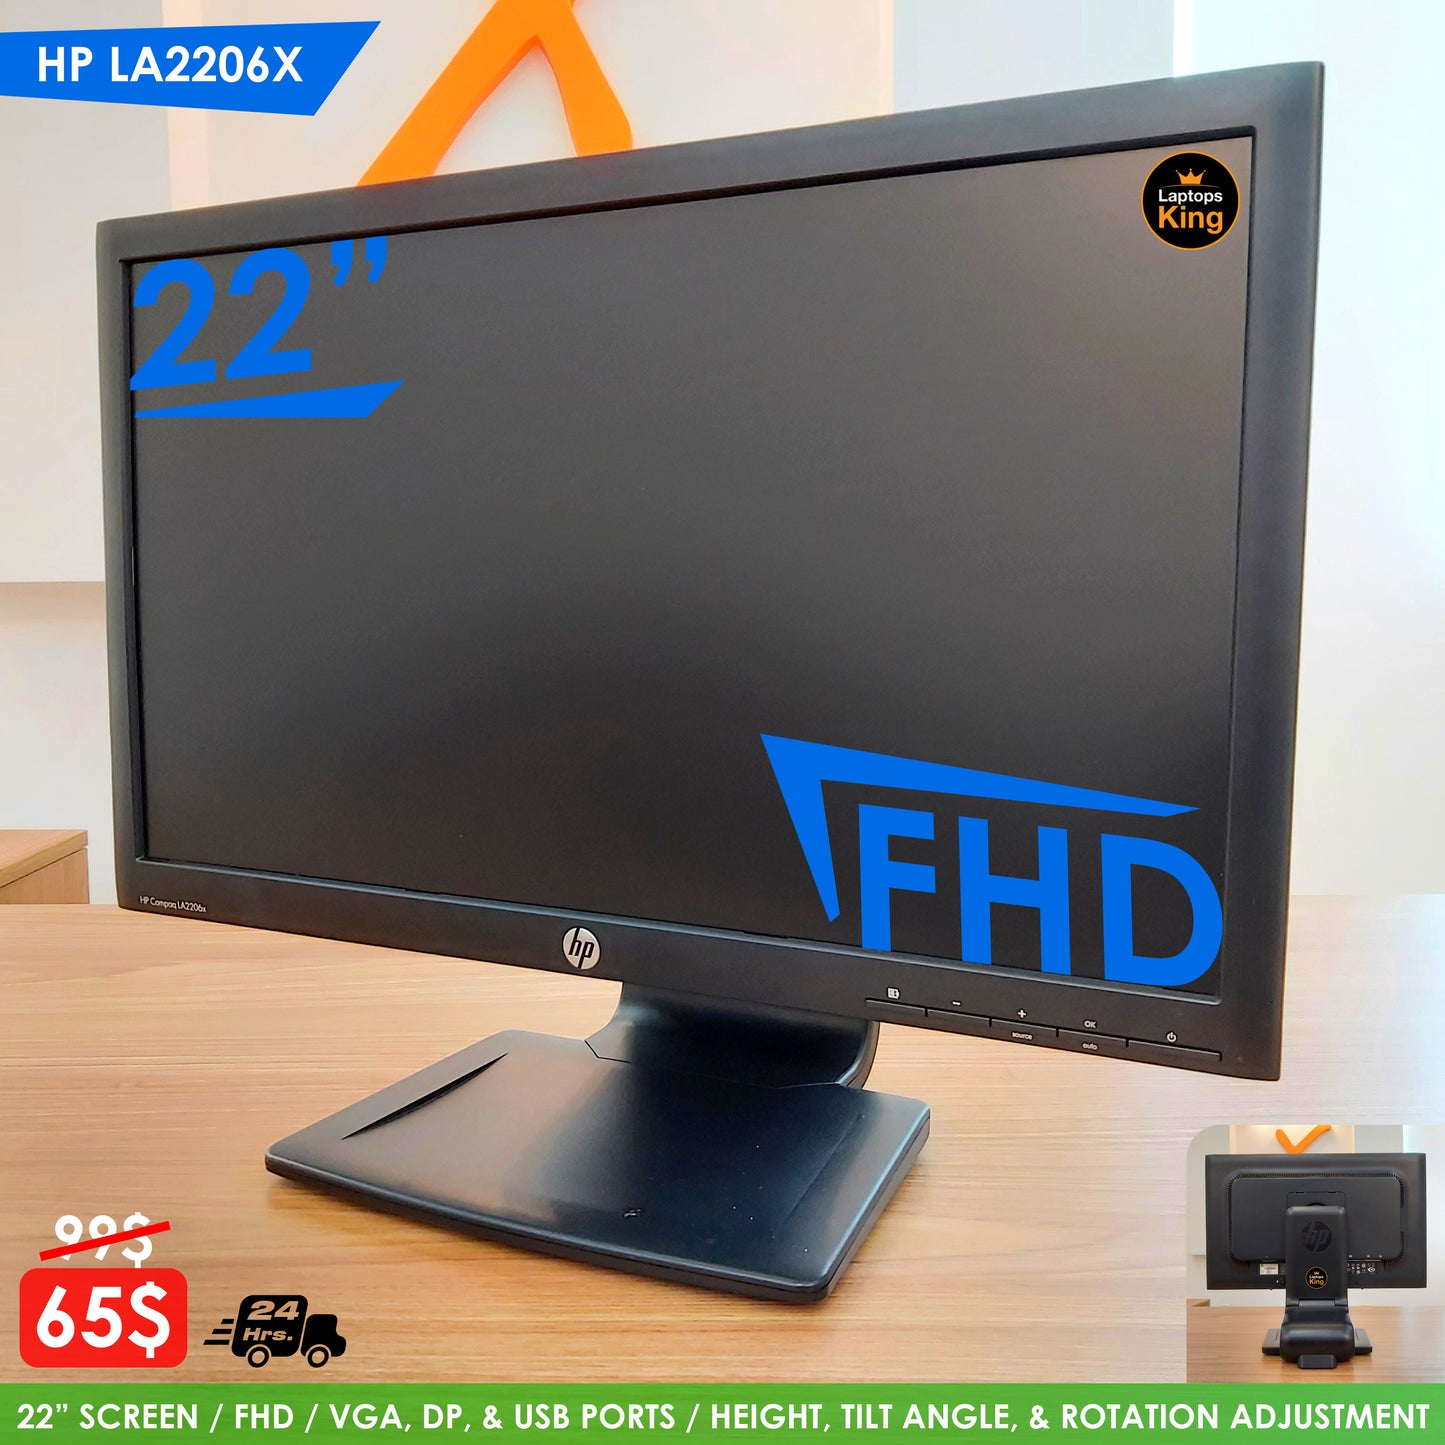 HP LA2206X Monitor 22" FHD (Used Very Clean)